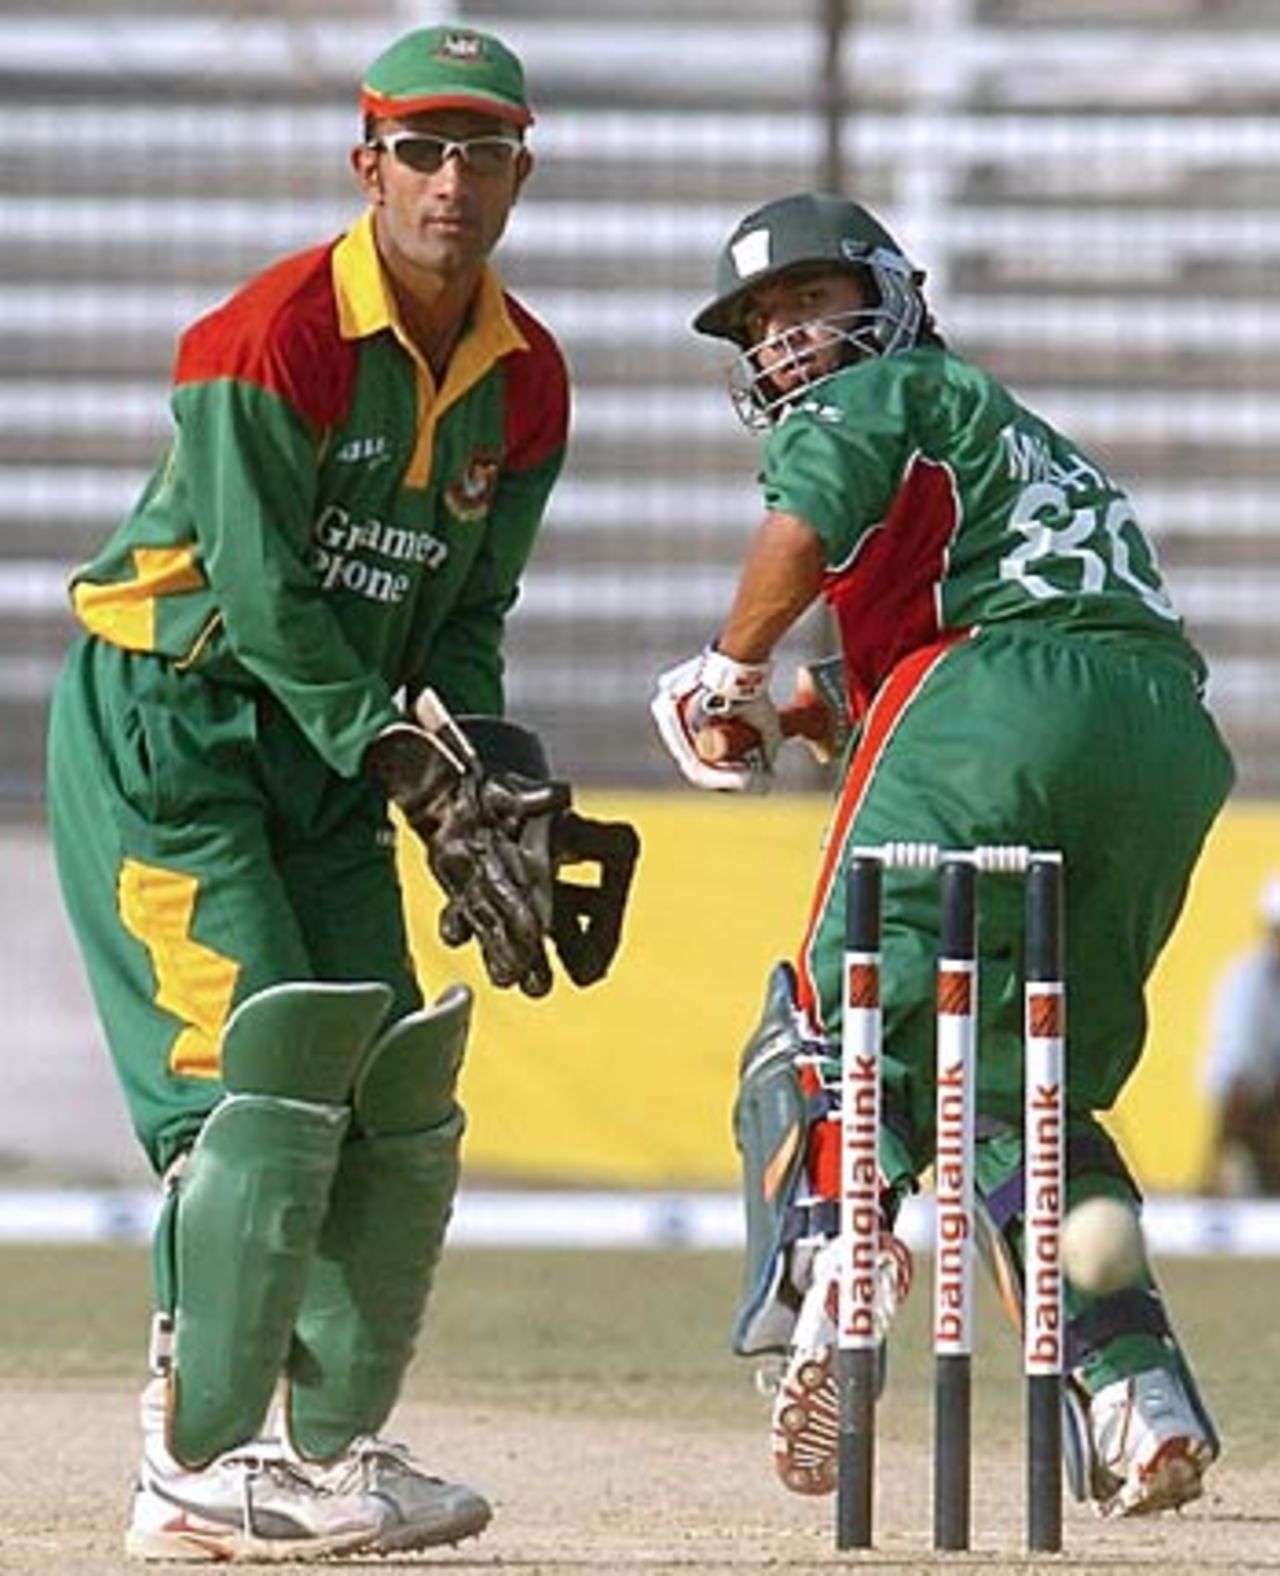 Tanmay Mishra clips a boundary, Bangladesh v Kenya, 3rd ODI, Fattullah, March 23, 2006